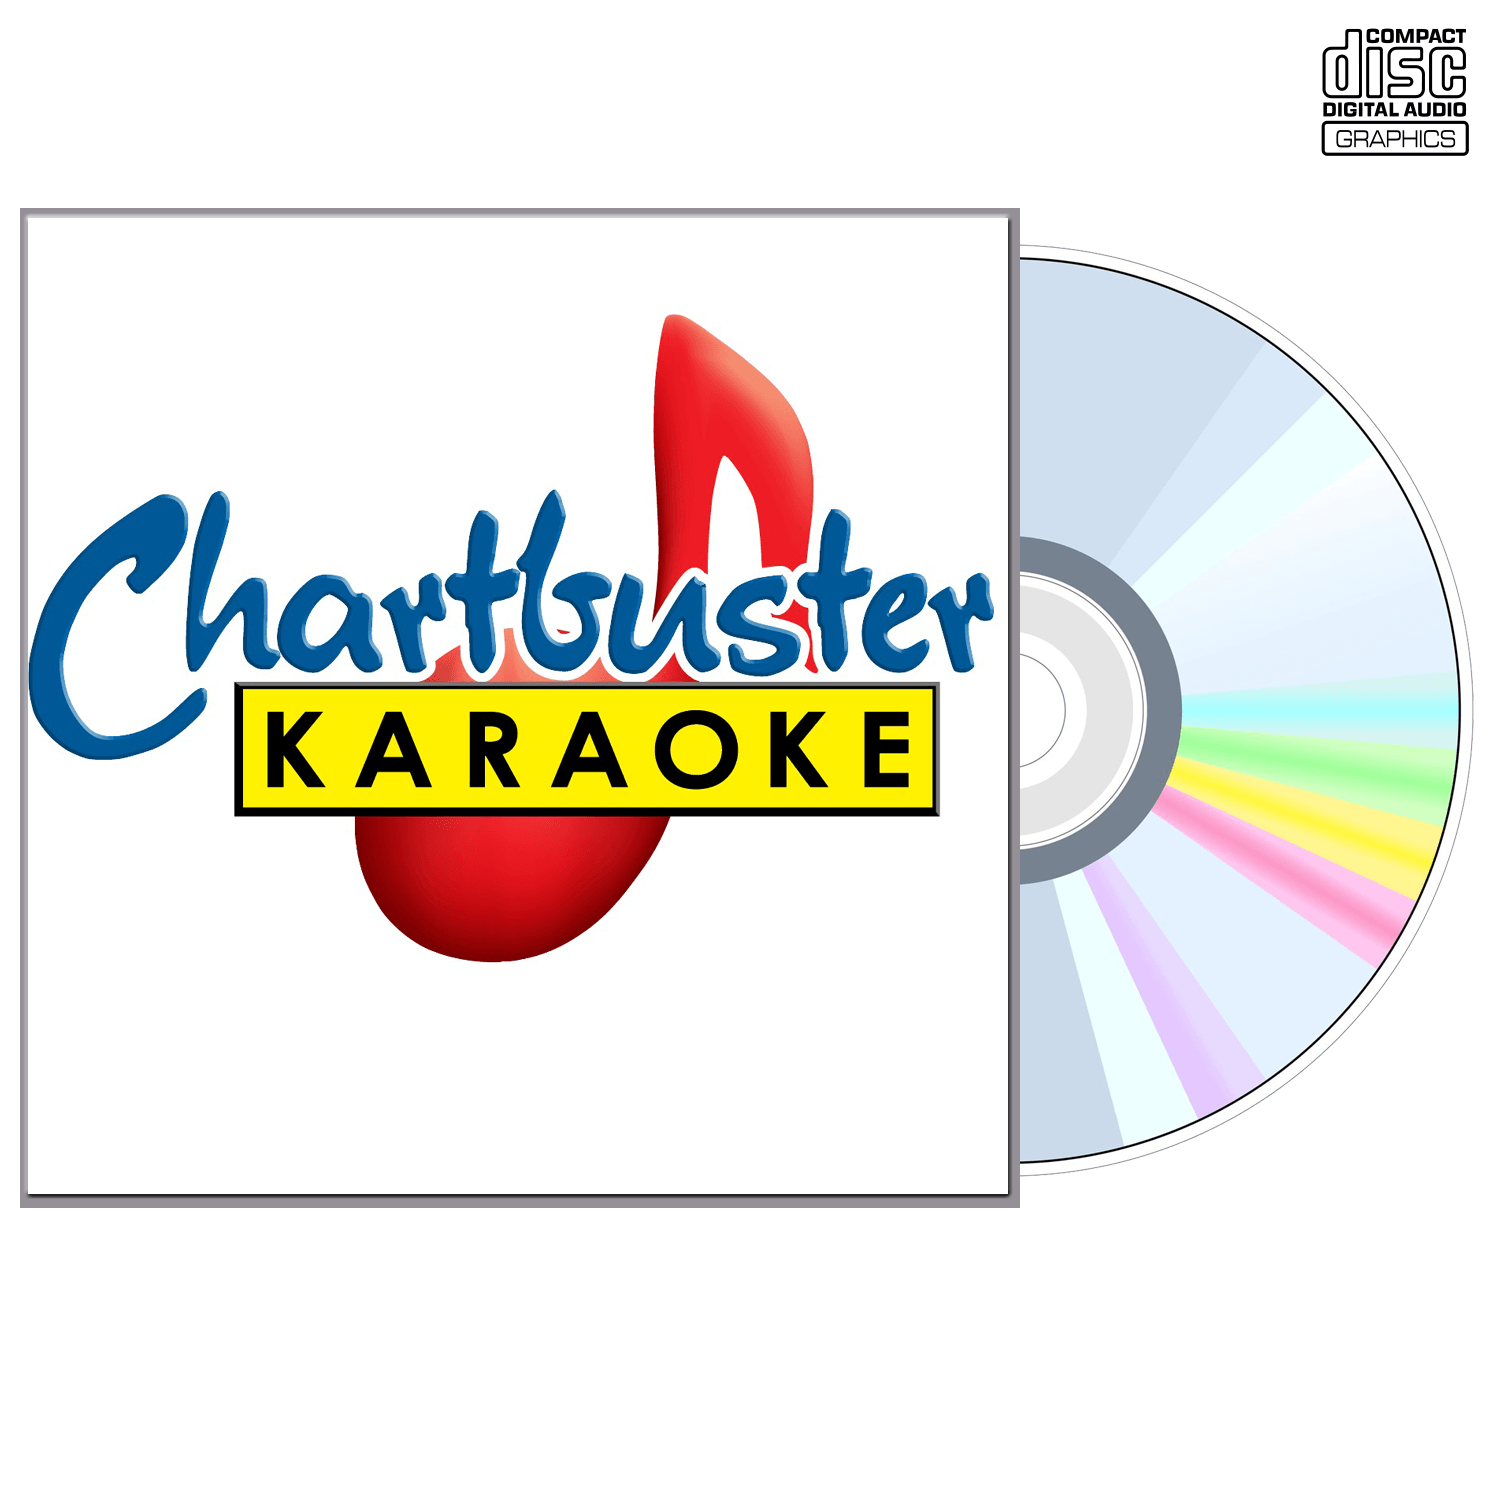 Old Time Memories 3 - CD+G - Chartbuster Karaoke - Karaoke Home Entertainment